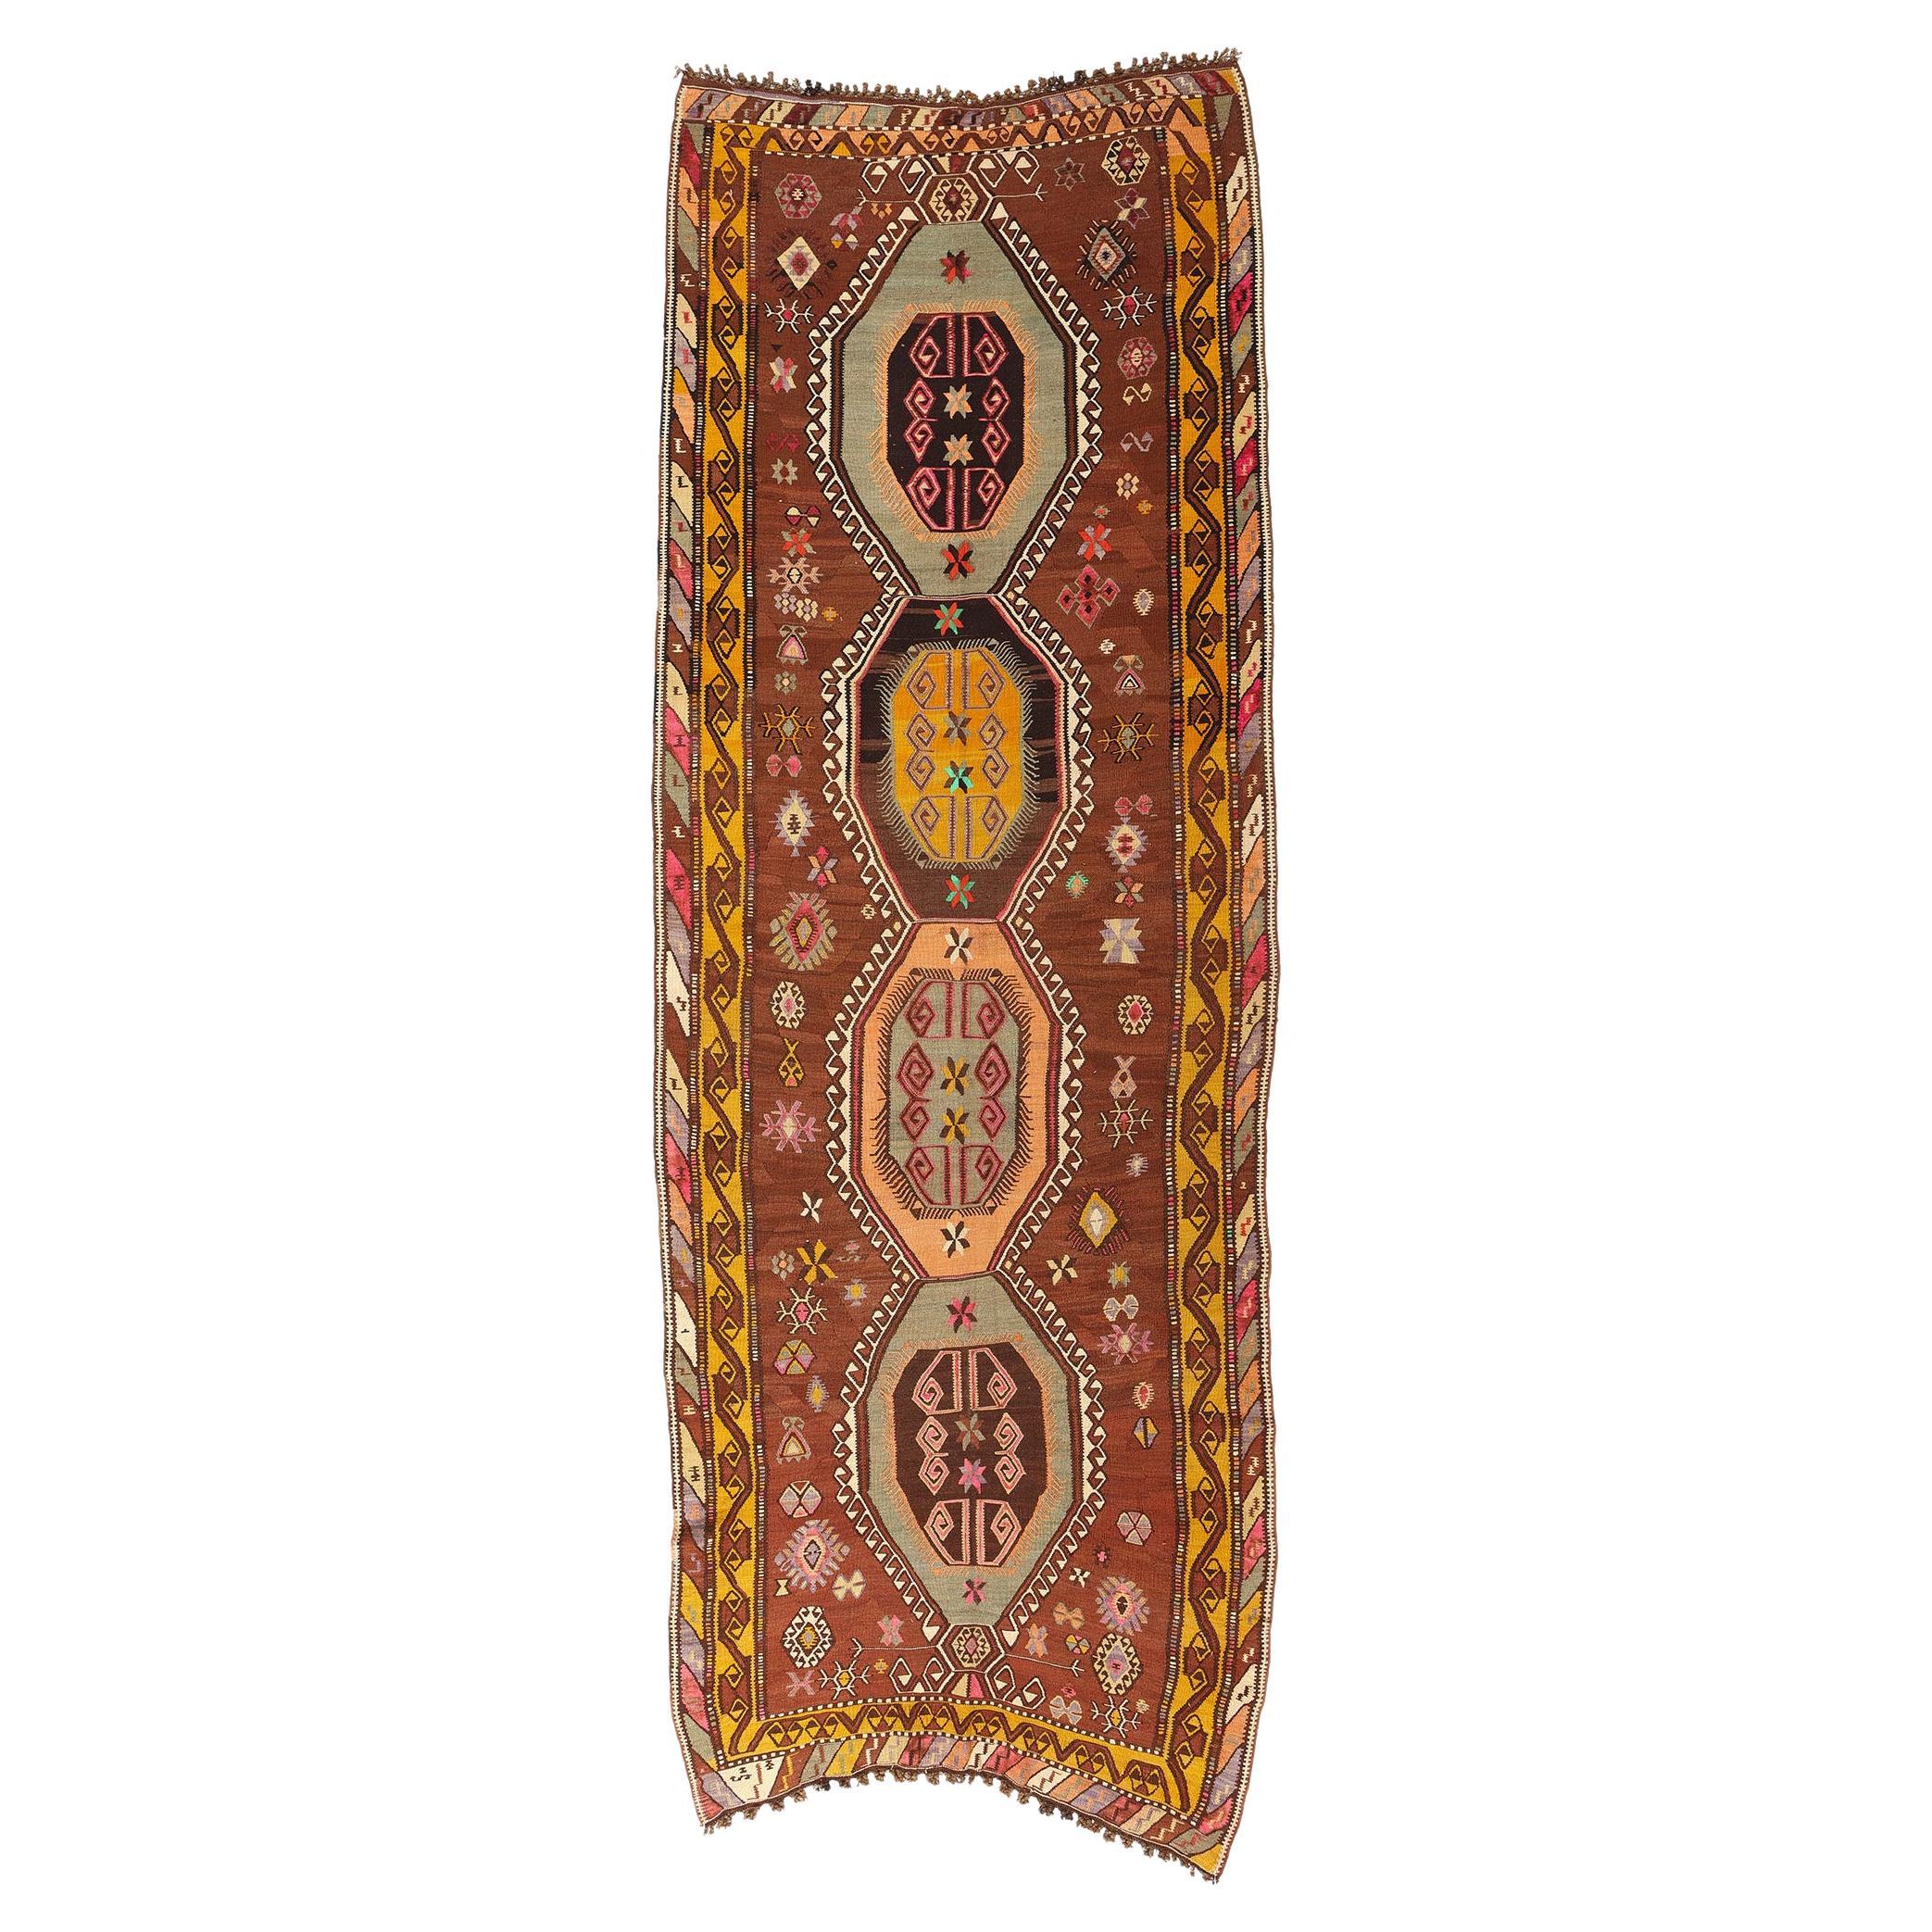  Vintage Turkish Kilim Rug, Colorful Bohemian Meets Tailor-Made Elegance For Sale